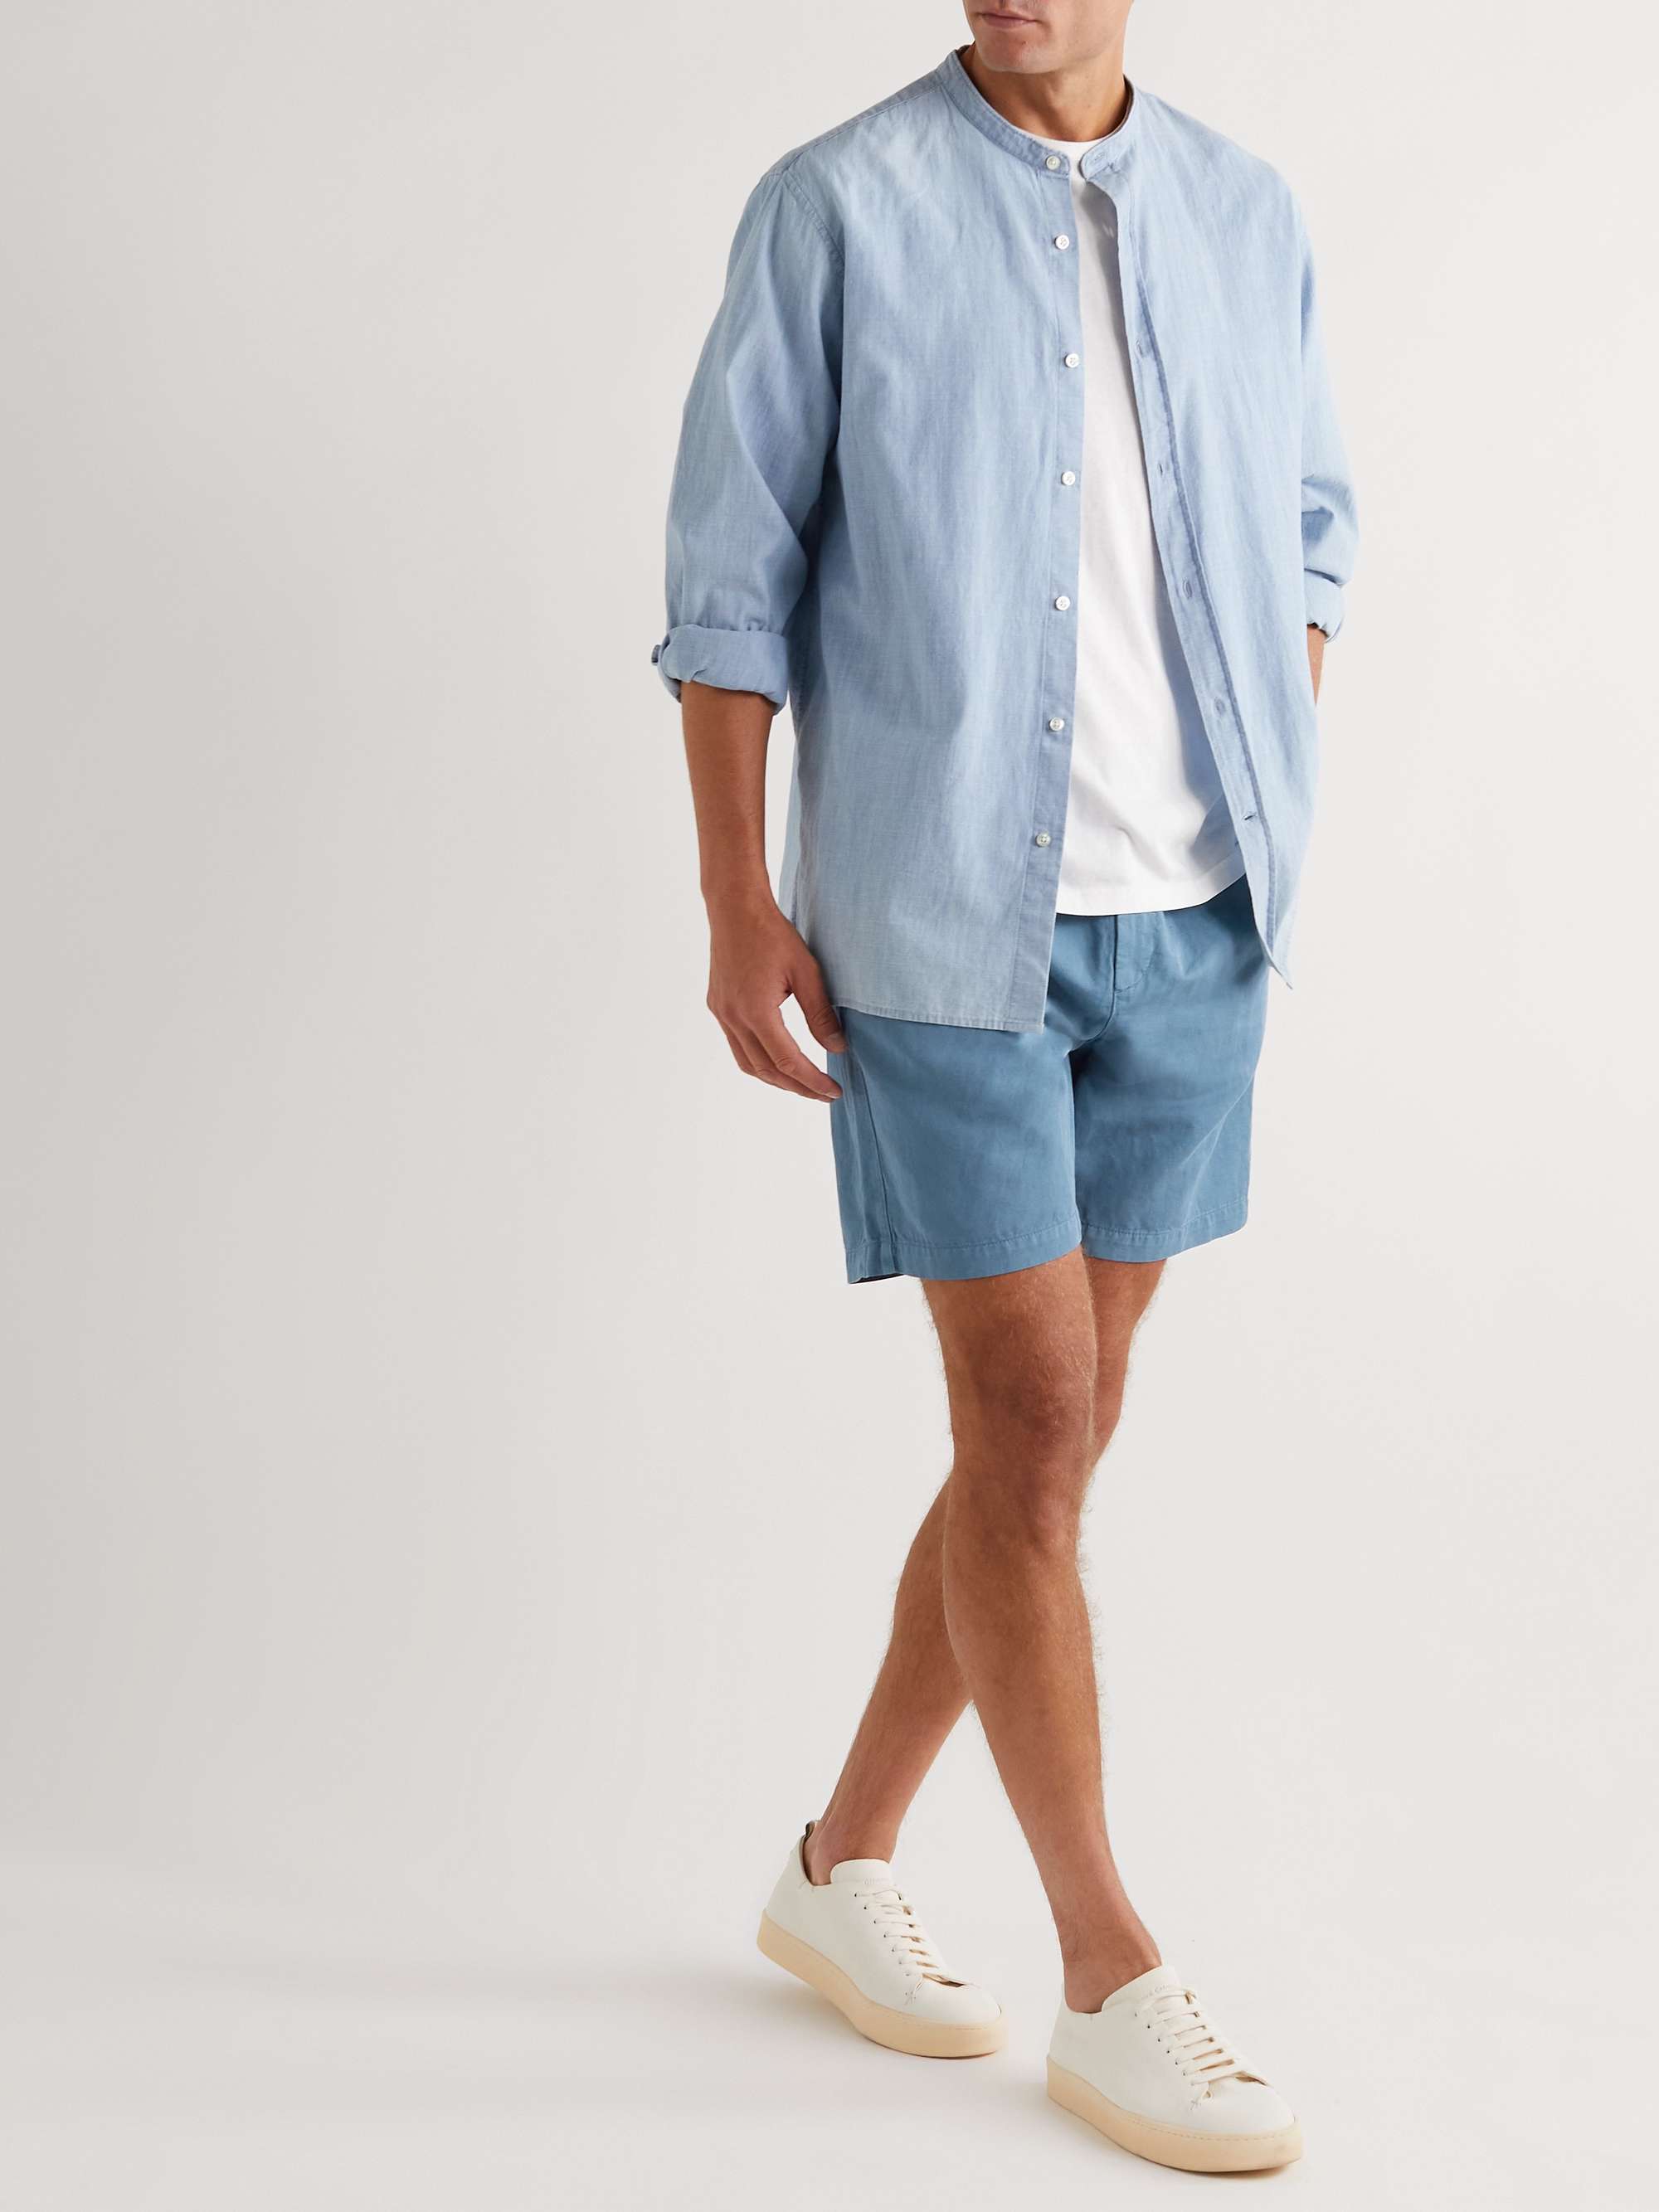 MR P. Cotton and Linen-Blend Twill Drawstring Shorts for Men | MR PORTER